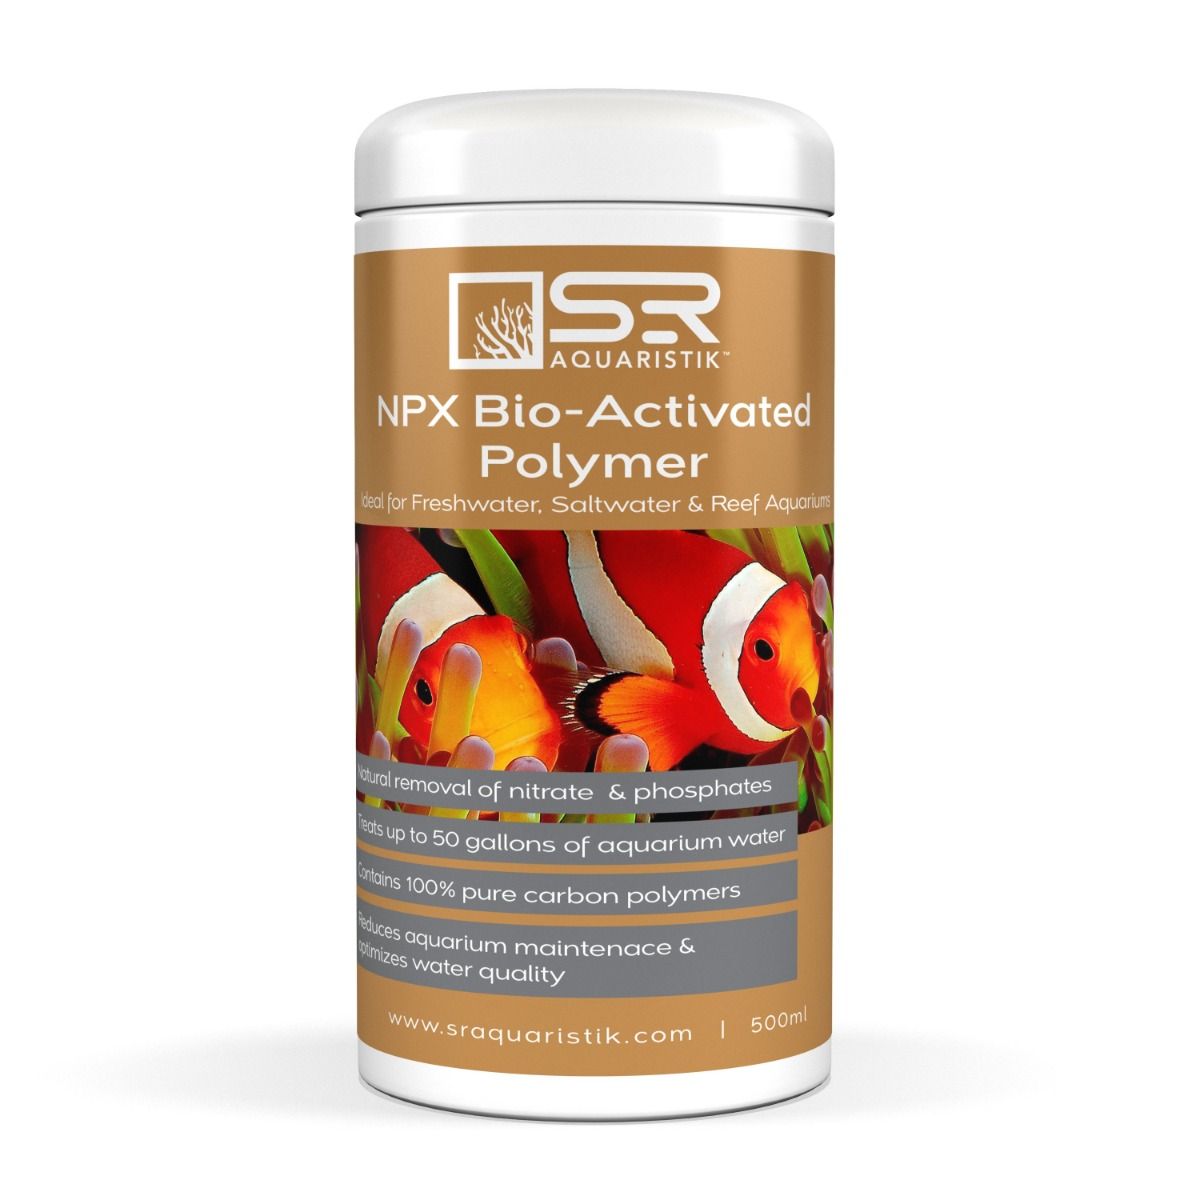 SR Aquaristik NPX Bio-Activated Polymer